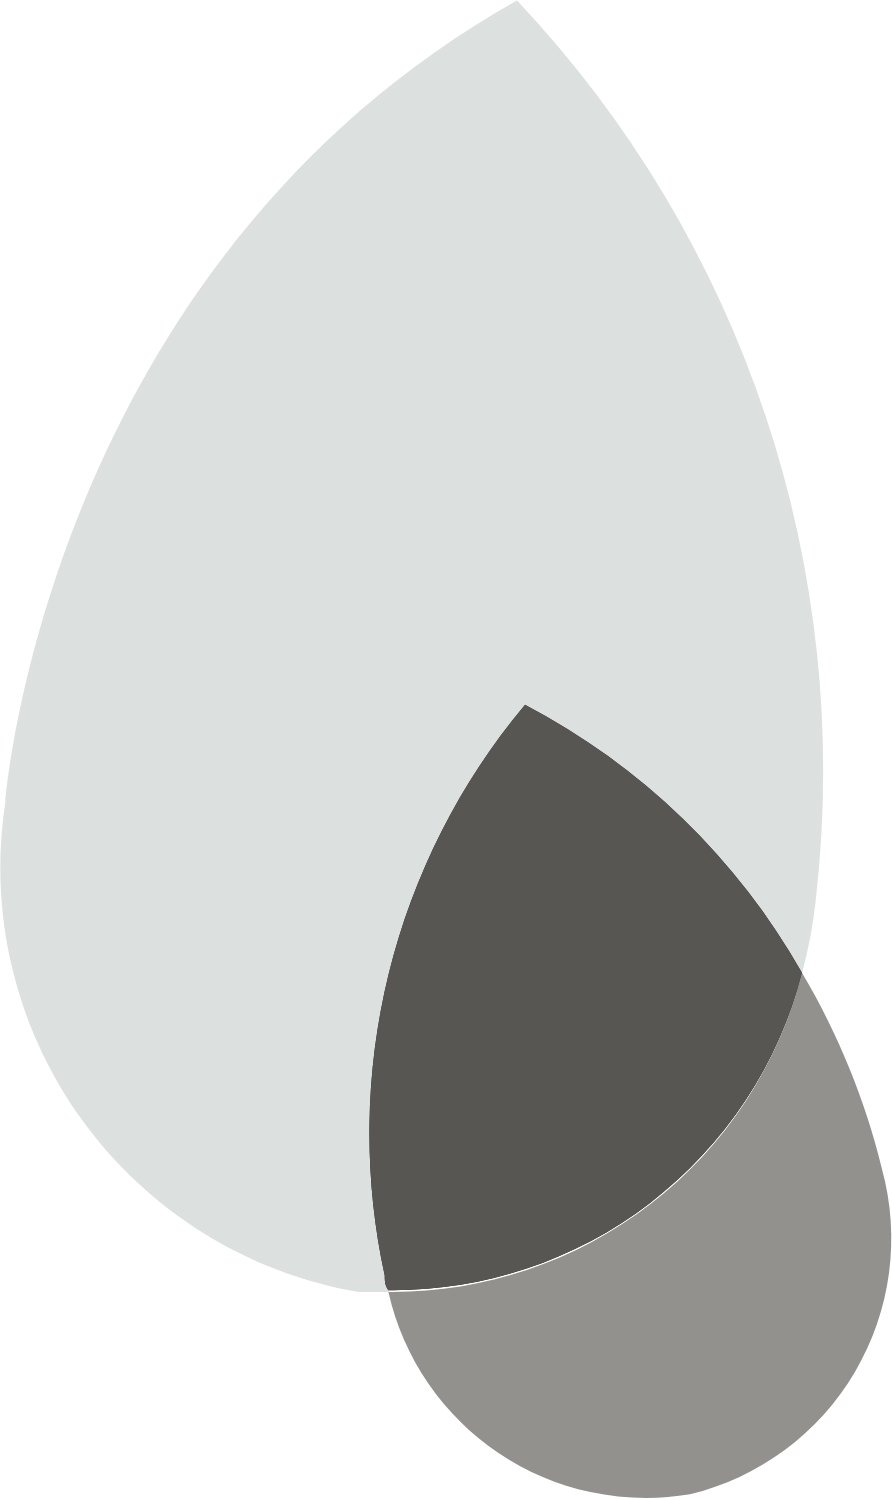 United States Oil Fund logo for dark backgrounds (transparent PNG)